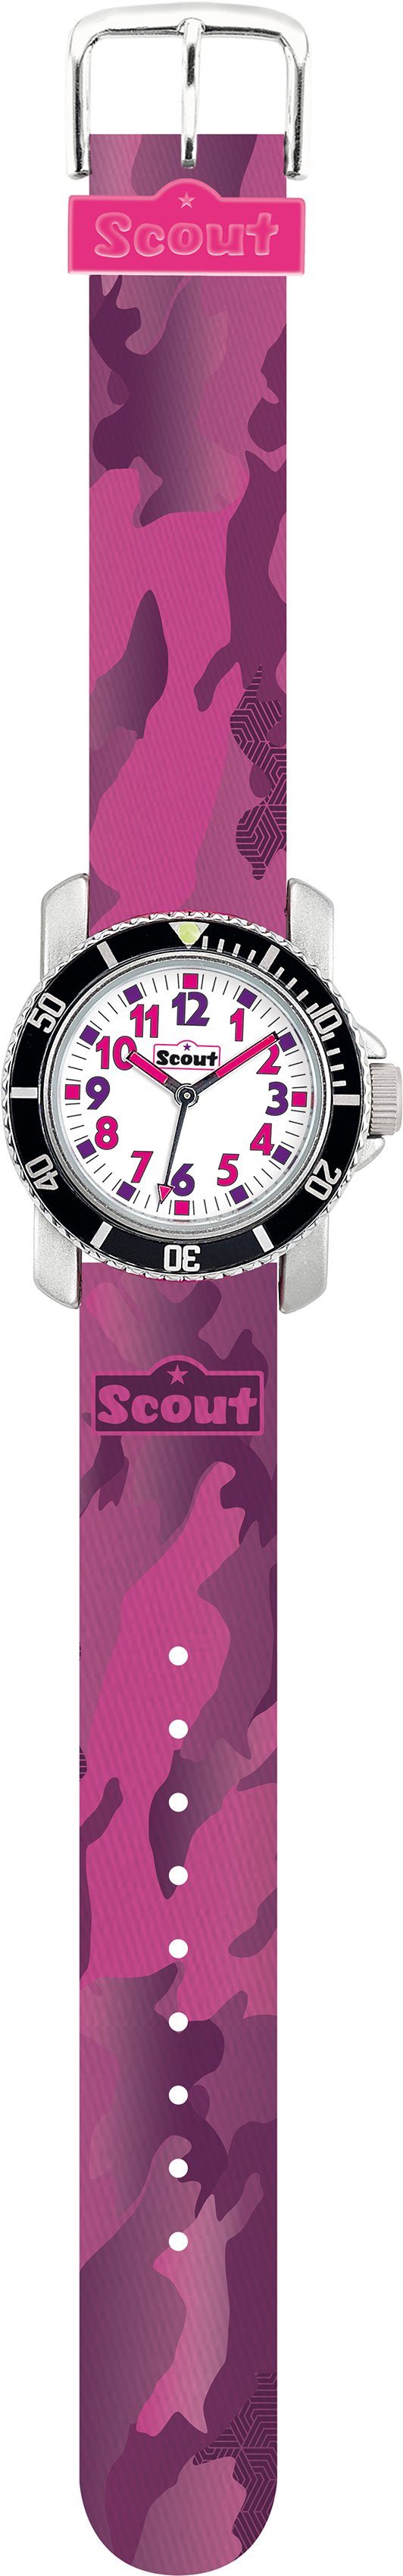 Scout Quarzuhr Diver, 280377004, ideal auch Geschenk als